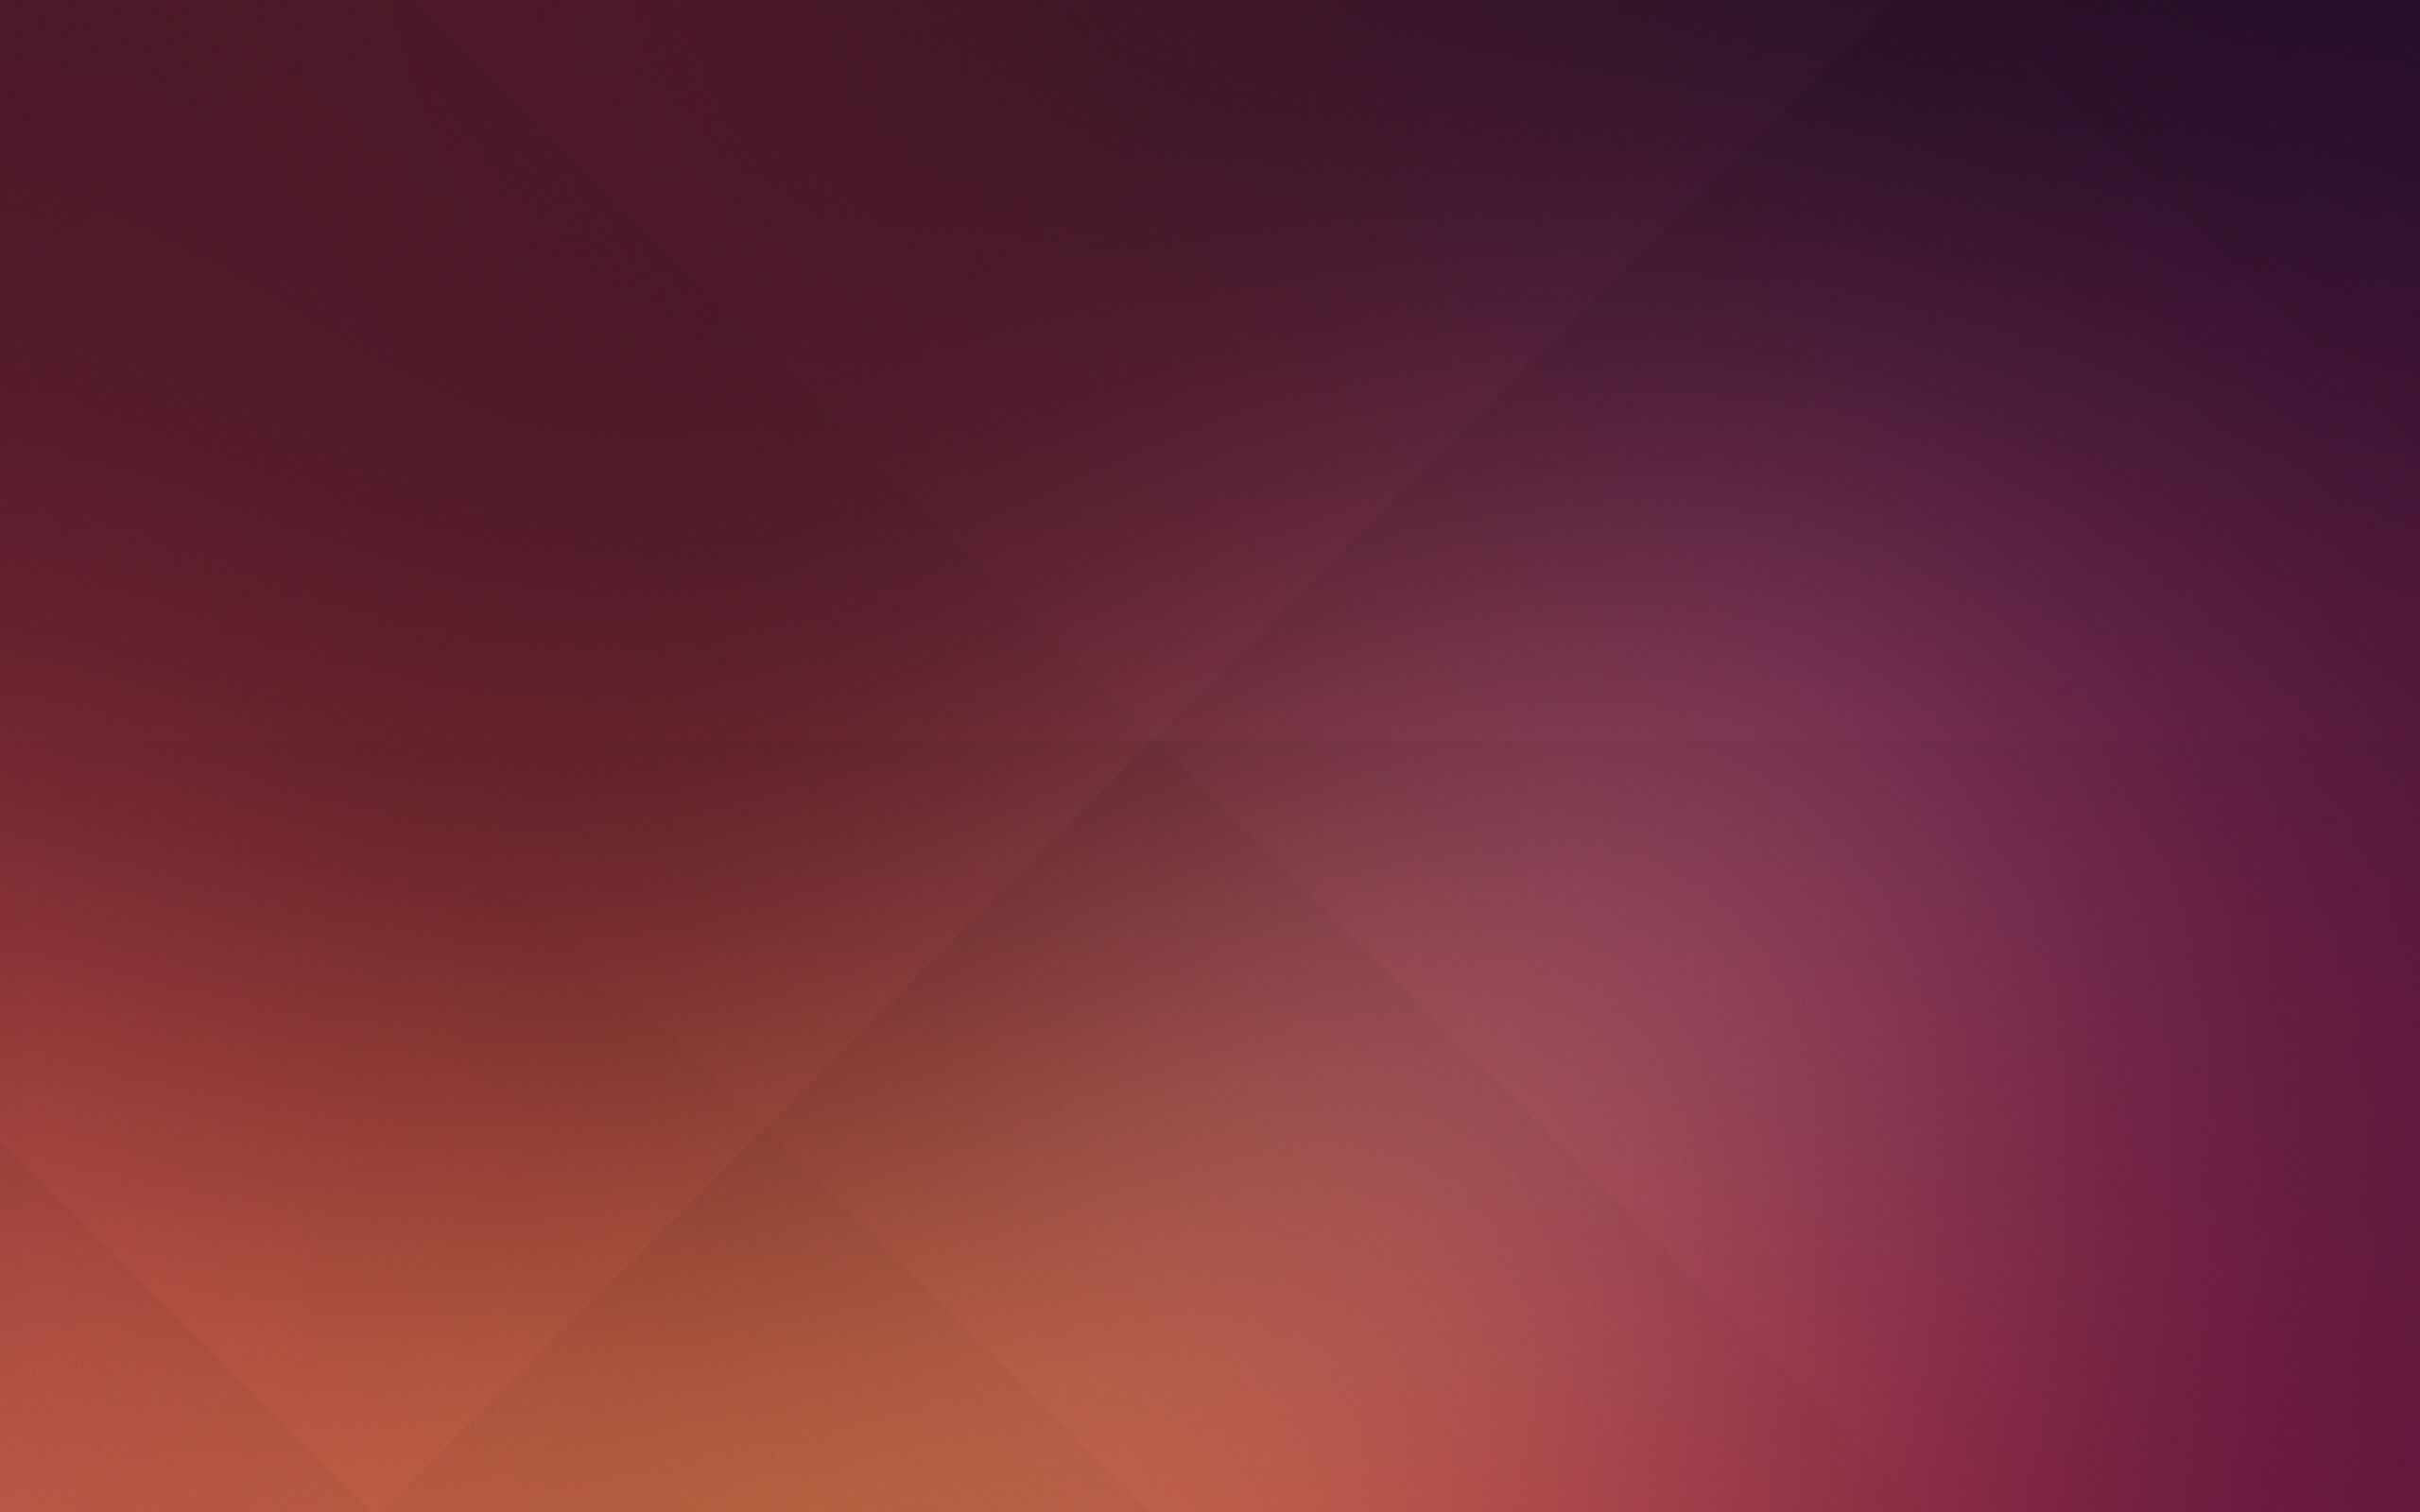 Ubuntu Lts Trusty Tahr Default Wallpaper Revealed Unixmen